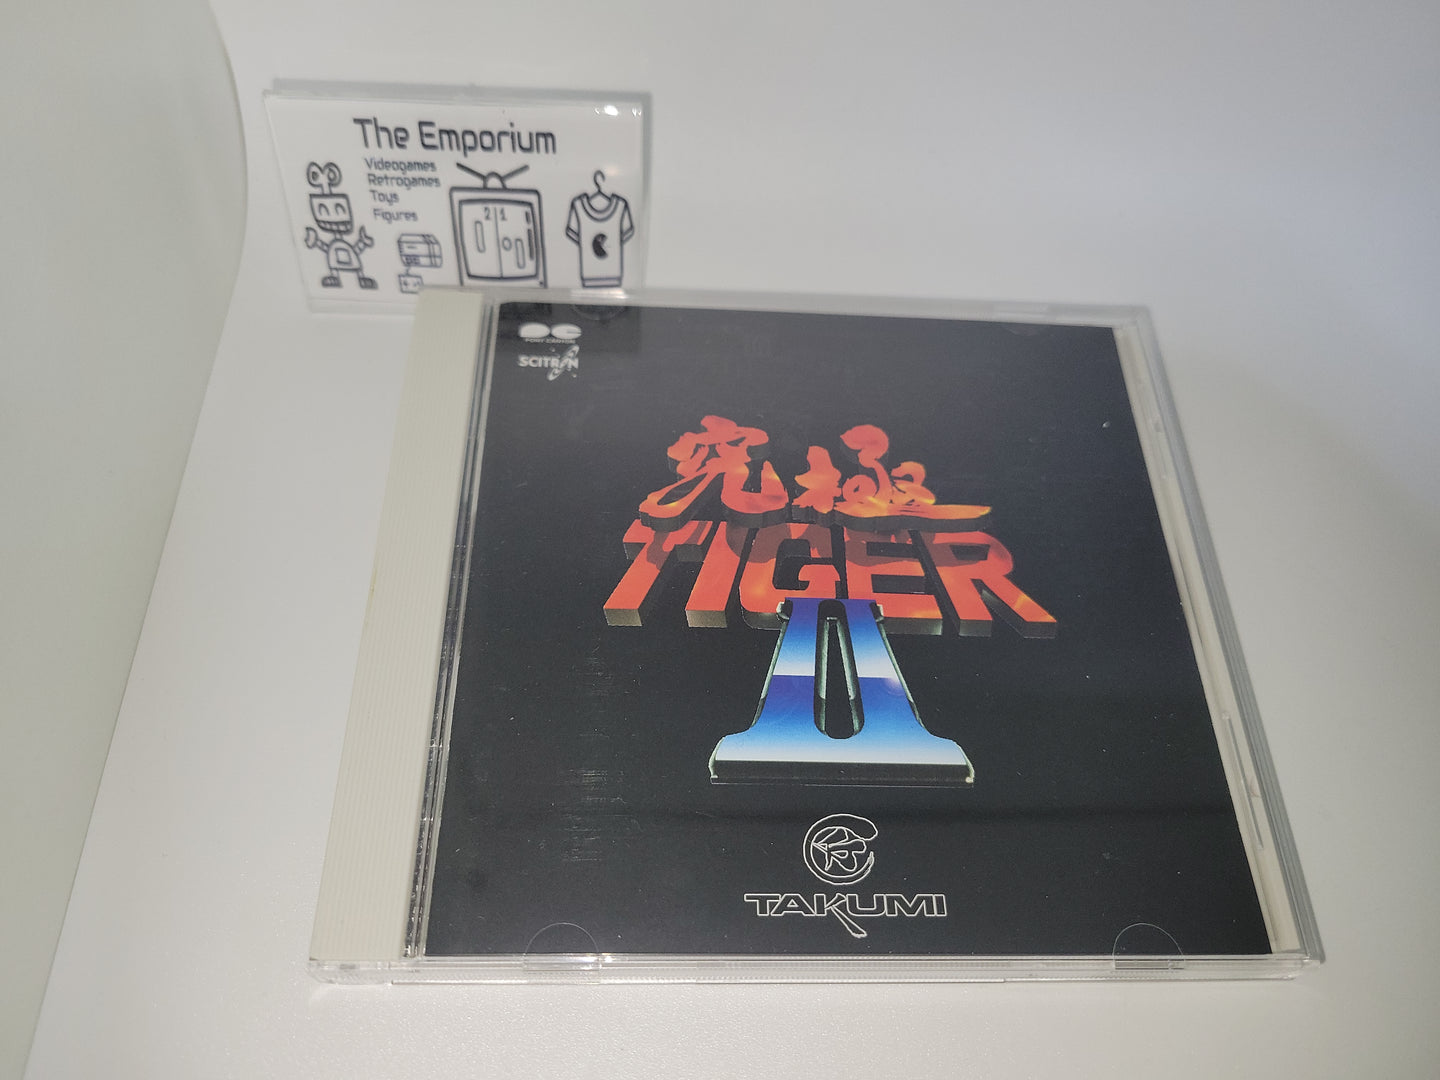 Kyuukyoku Tiger II

- Music cd soundtrack